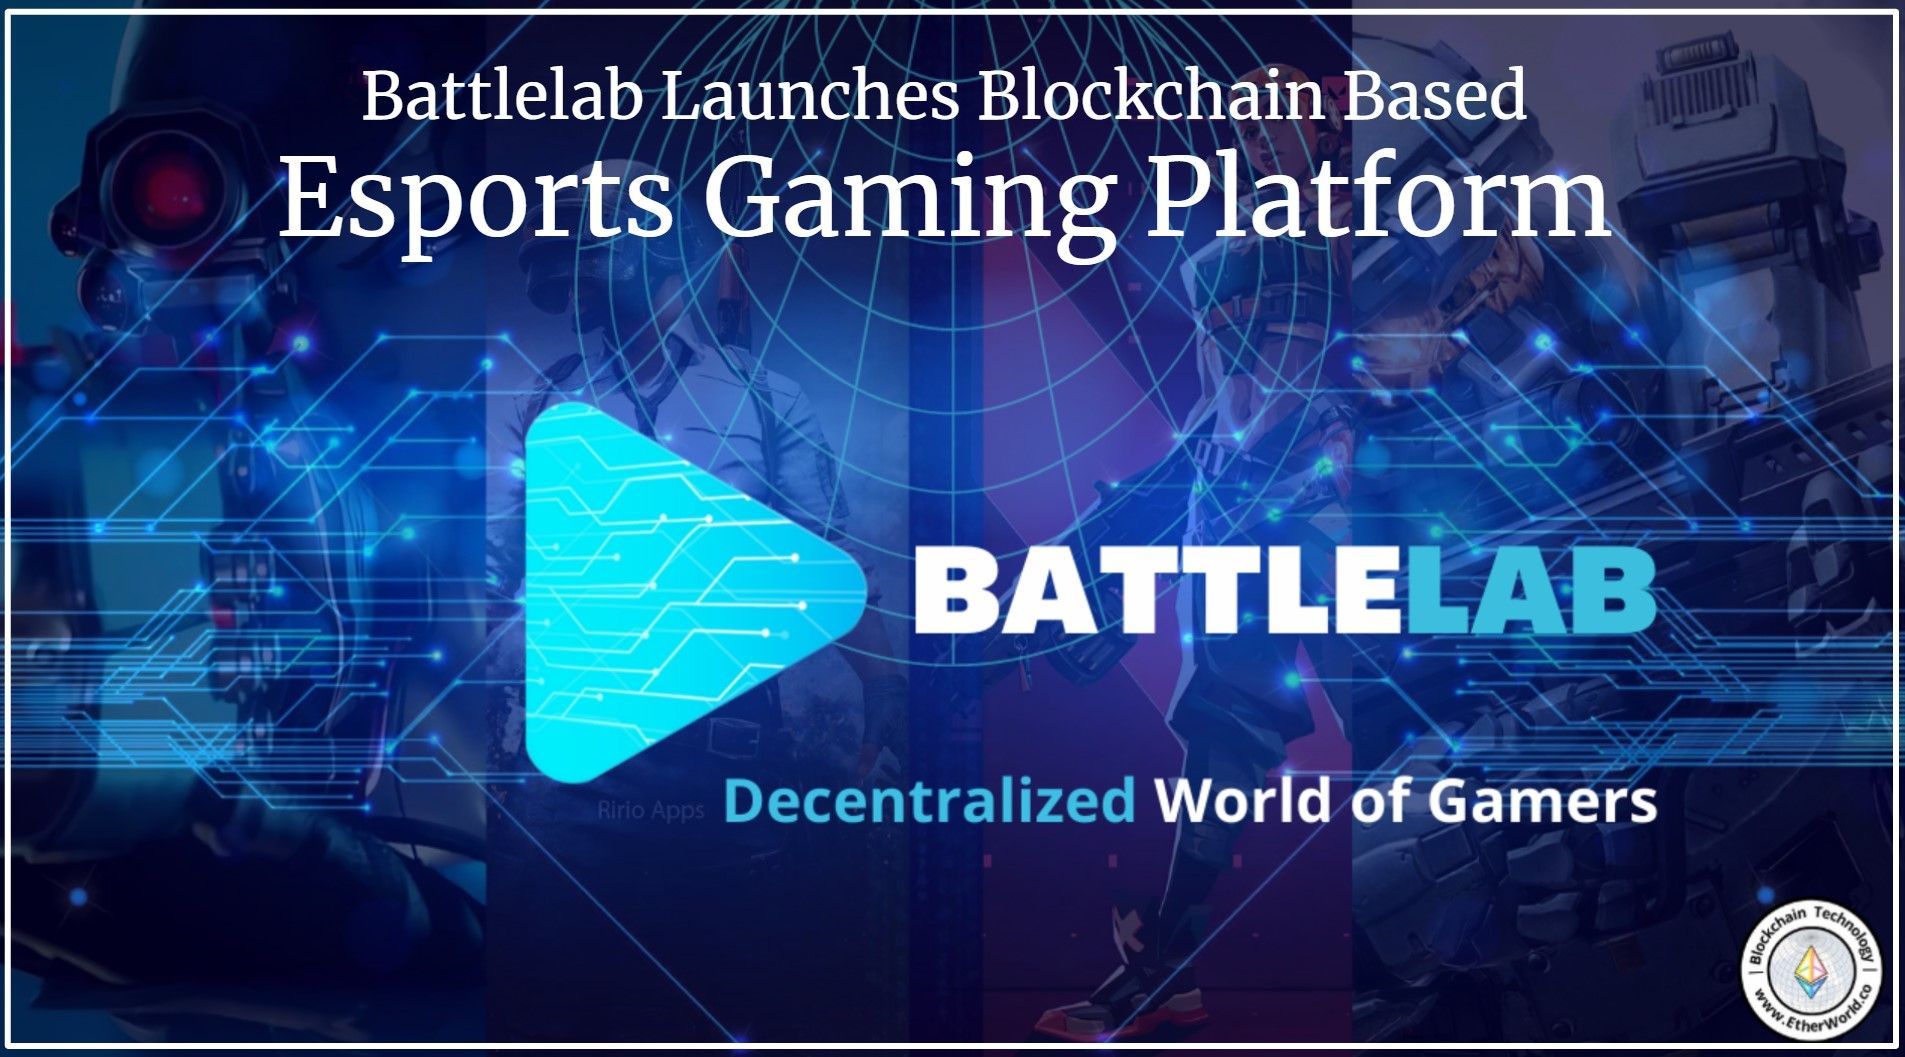 Battlelab Launches Blockchain Based Esports Gaming Platform